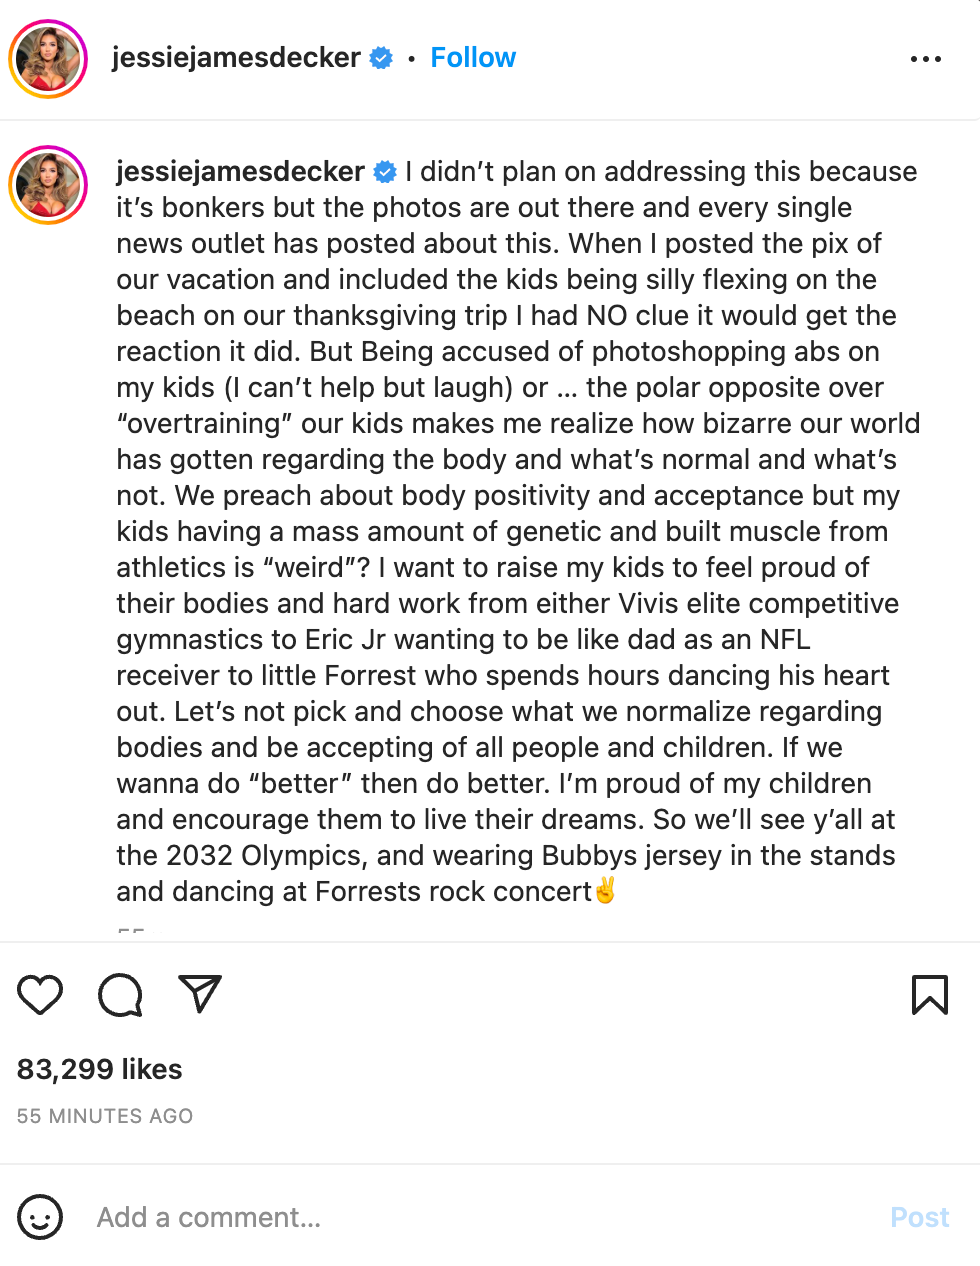 Jessie James Decker Addresses 'Bonkers' Photoshop Ab Debate About Her Kids!